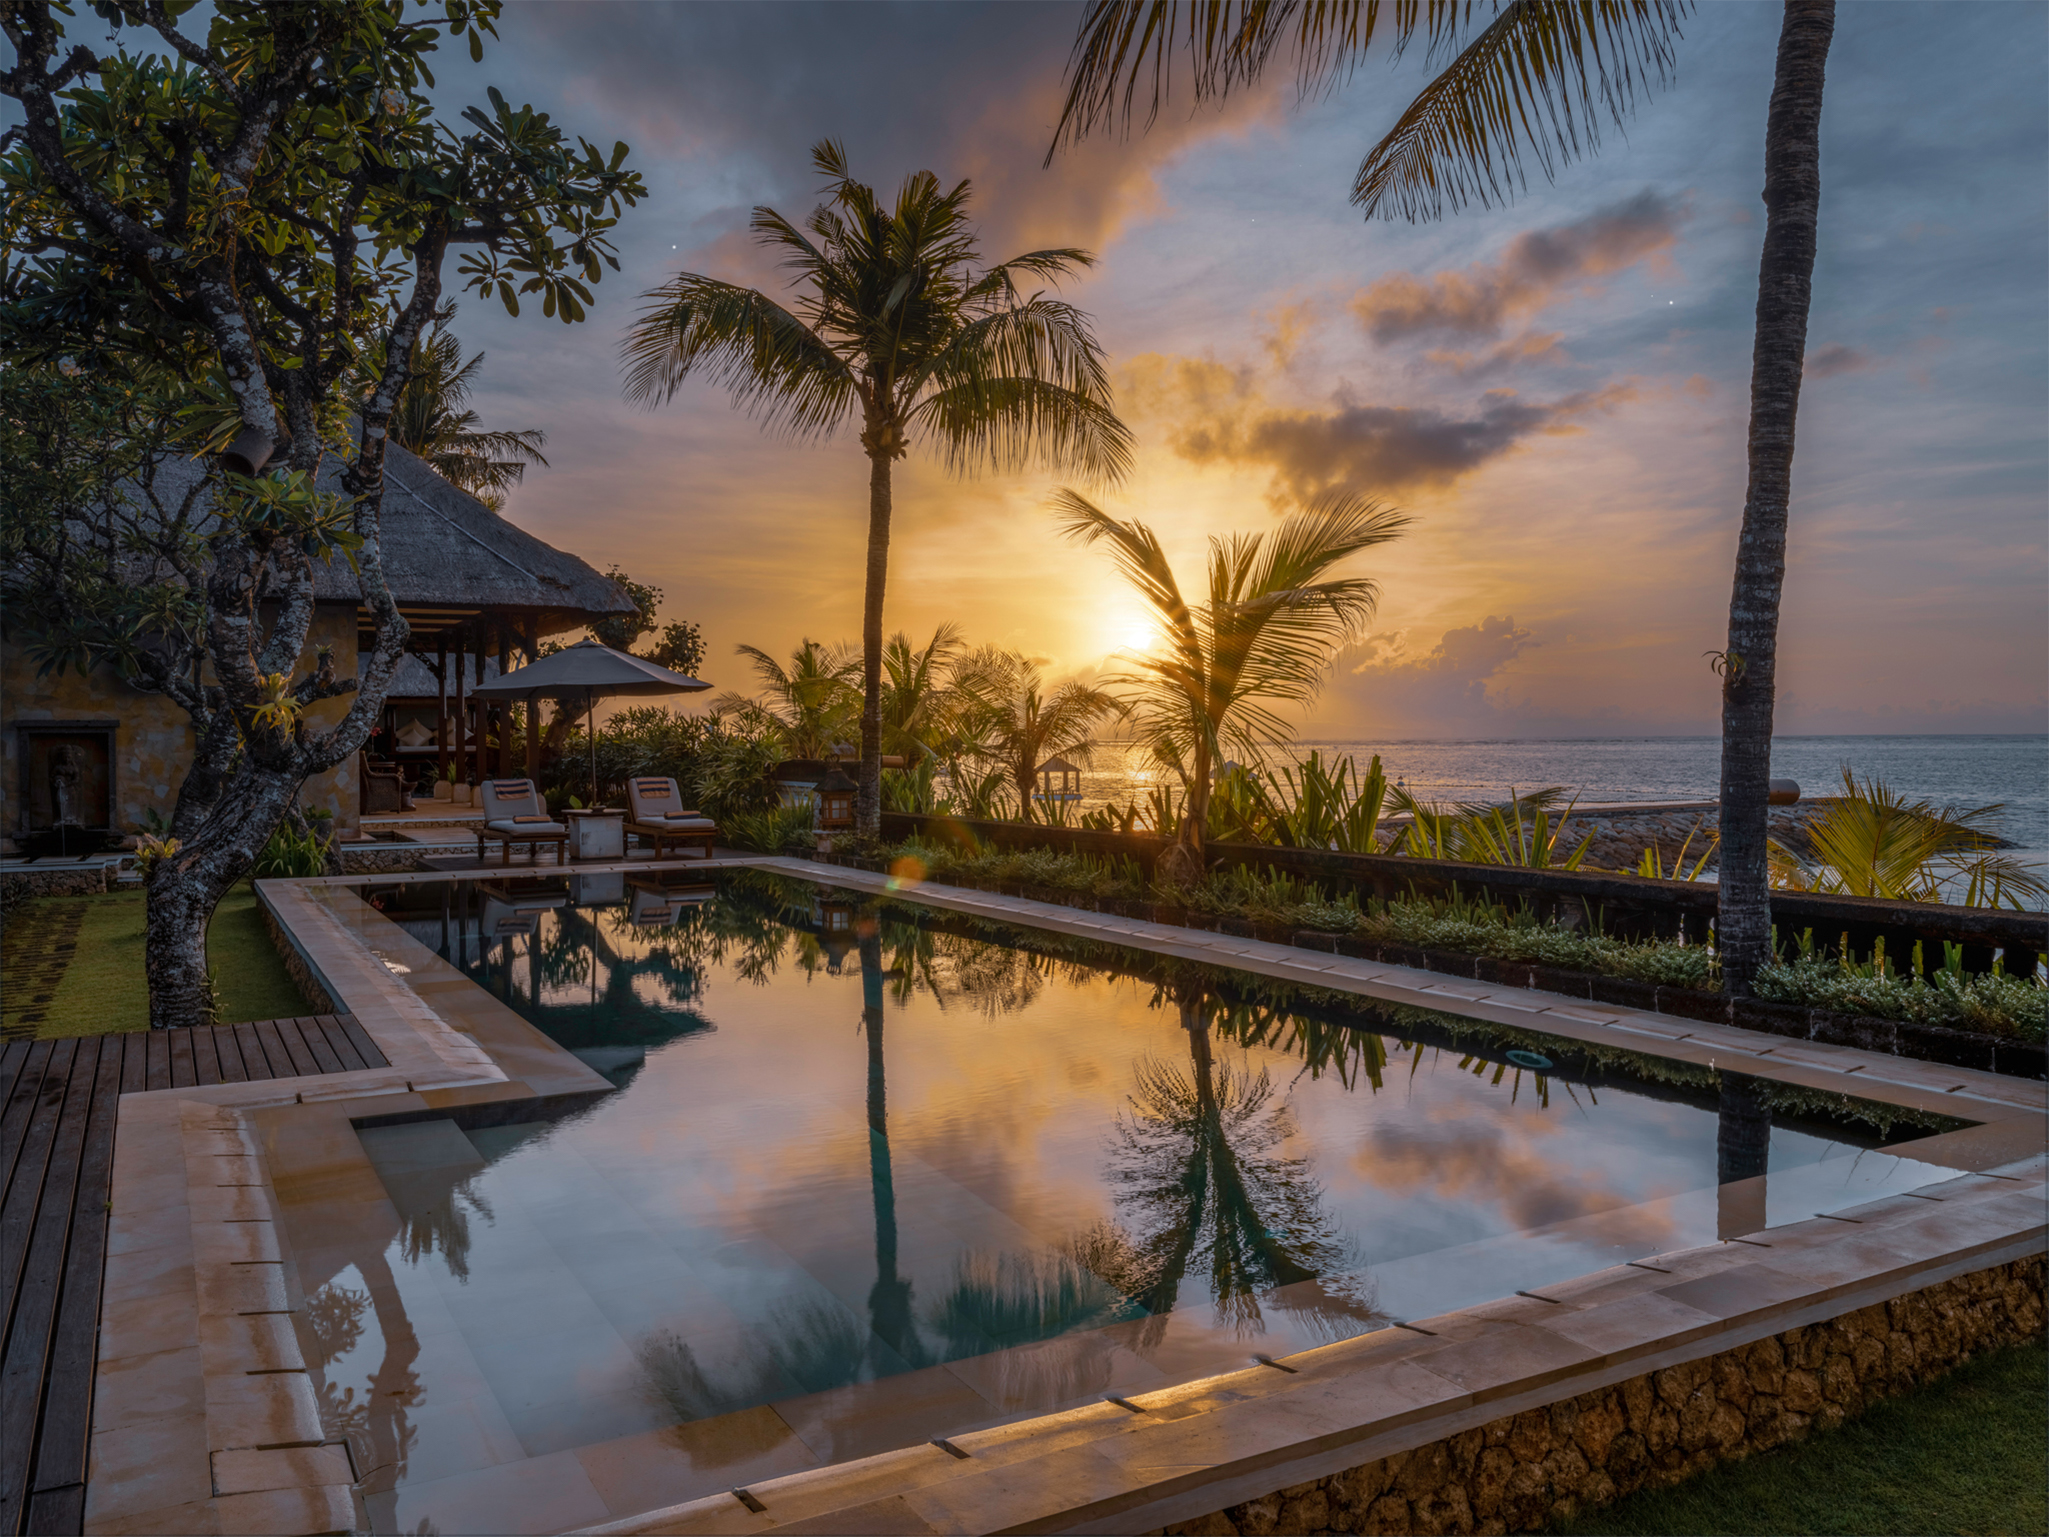 Villa Cemara - Sunset by the pool - Villa Cemara, Sanur, Bali